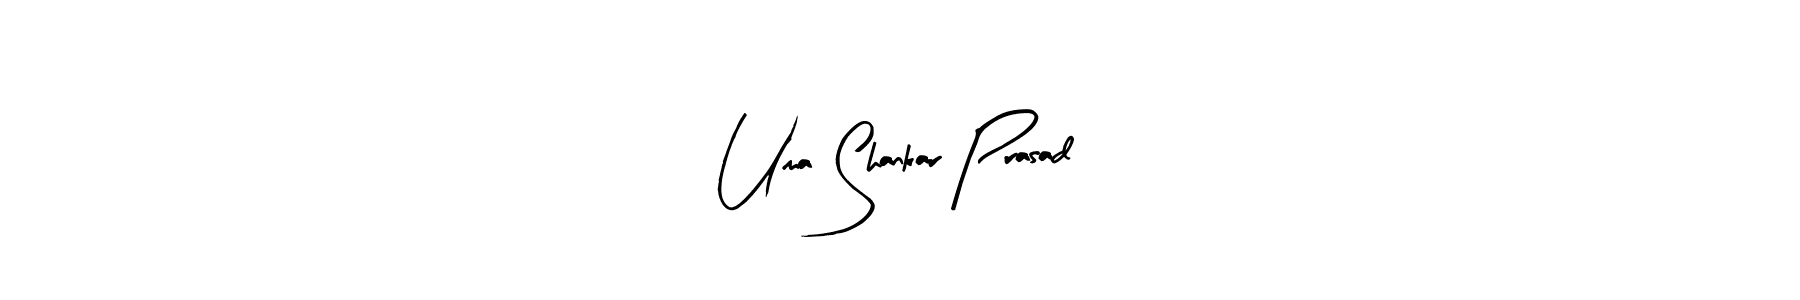 Use a signature maker to create a handwritten signature online. With this signature software, you can design (Arty Signature) your own signature for name Uma Shankar Prasad. Uma Shankar Prasad signature style 8 images and pictures png